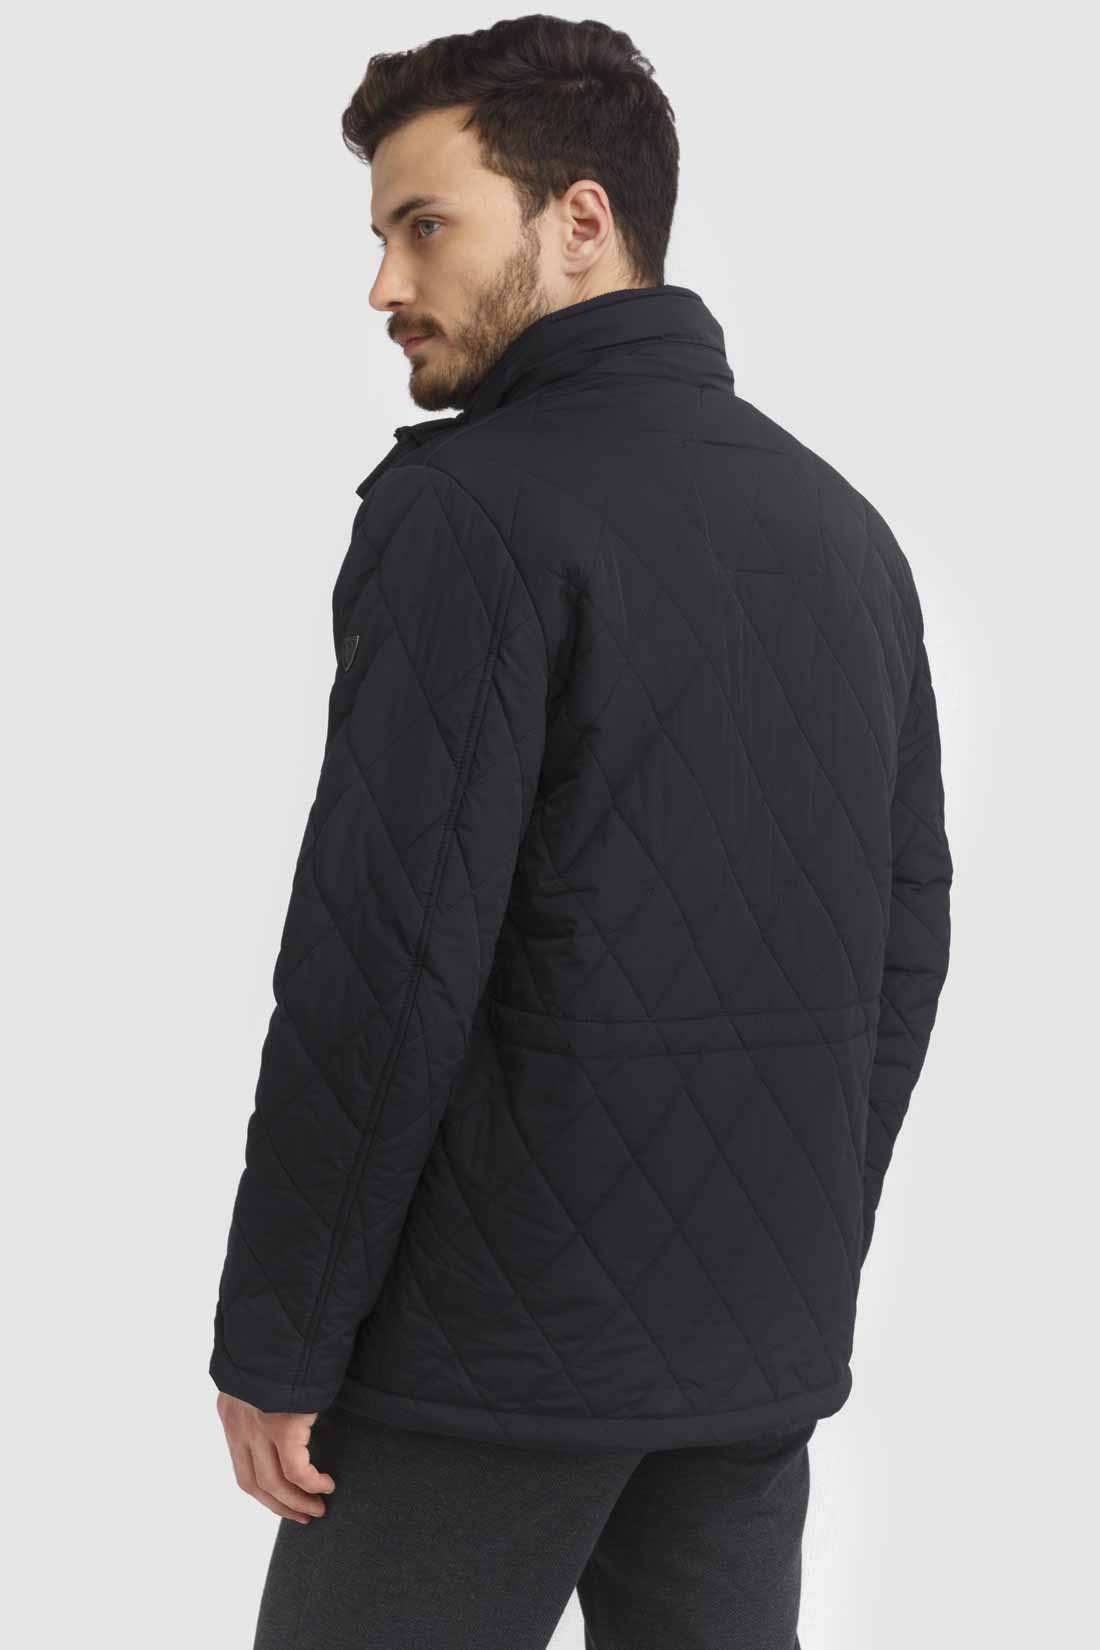 Куртка (арт. baon B530502), размер M, цвет черный Куртка (арт. baon B530502) - фото 2